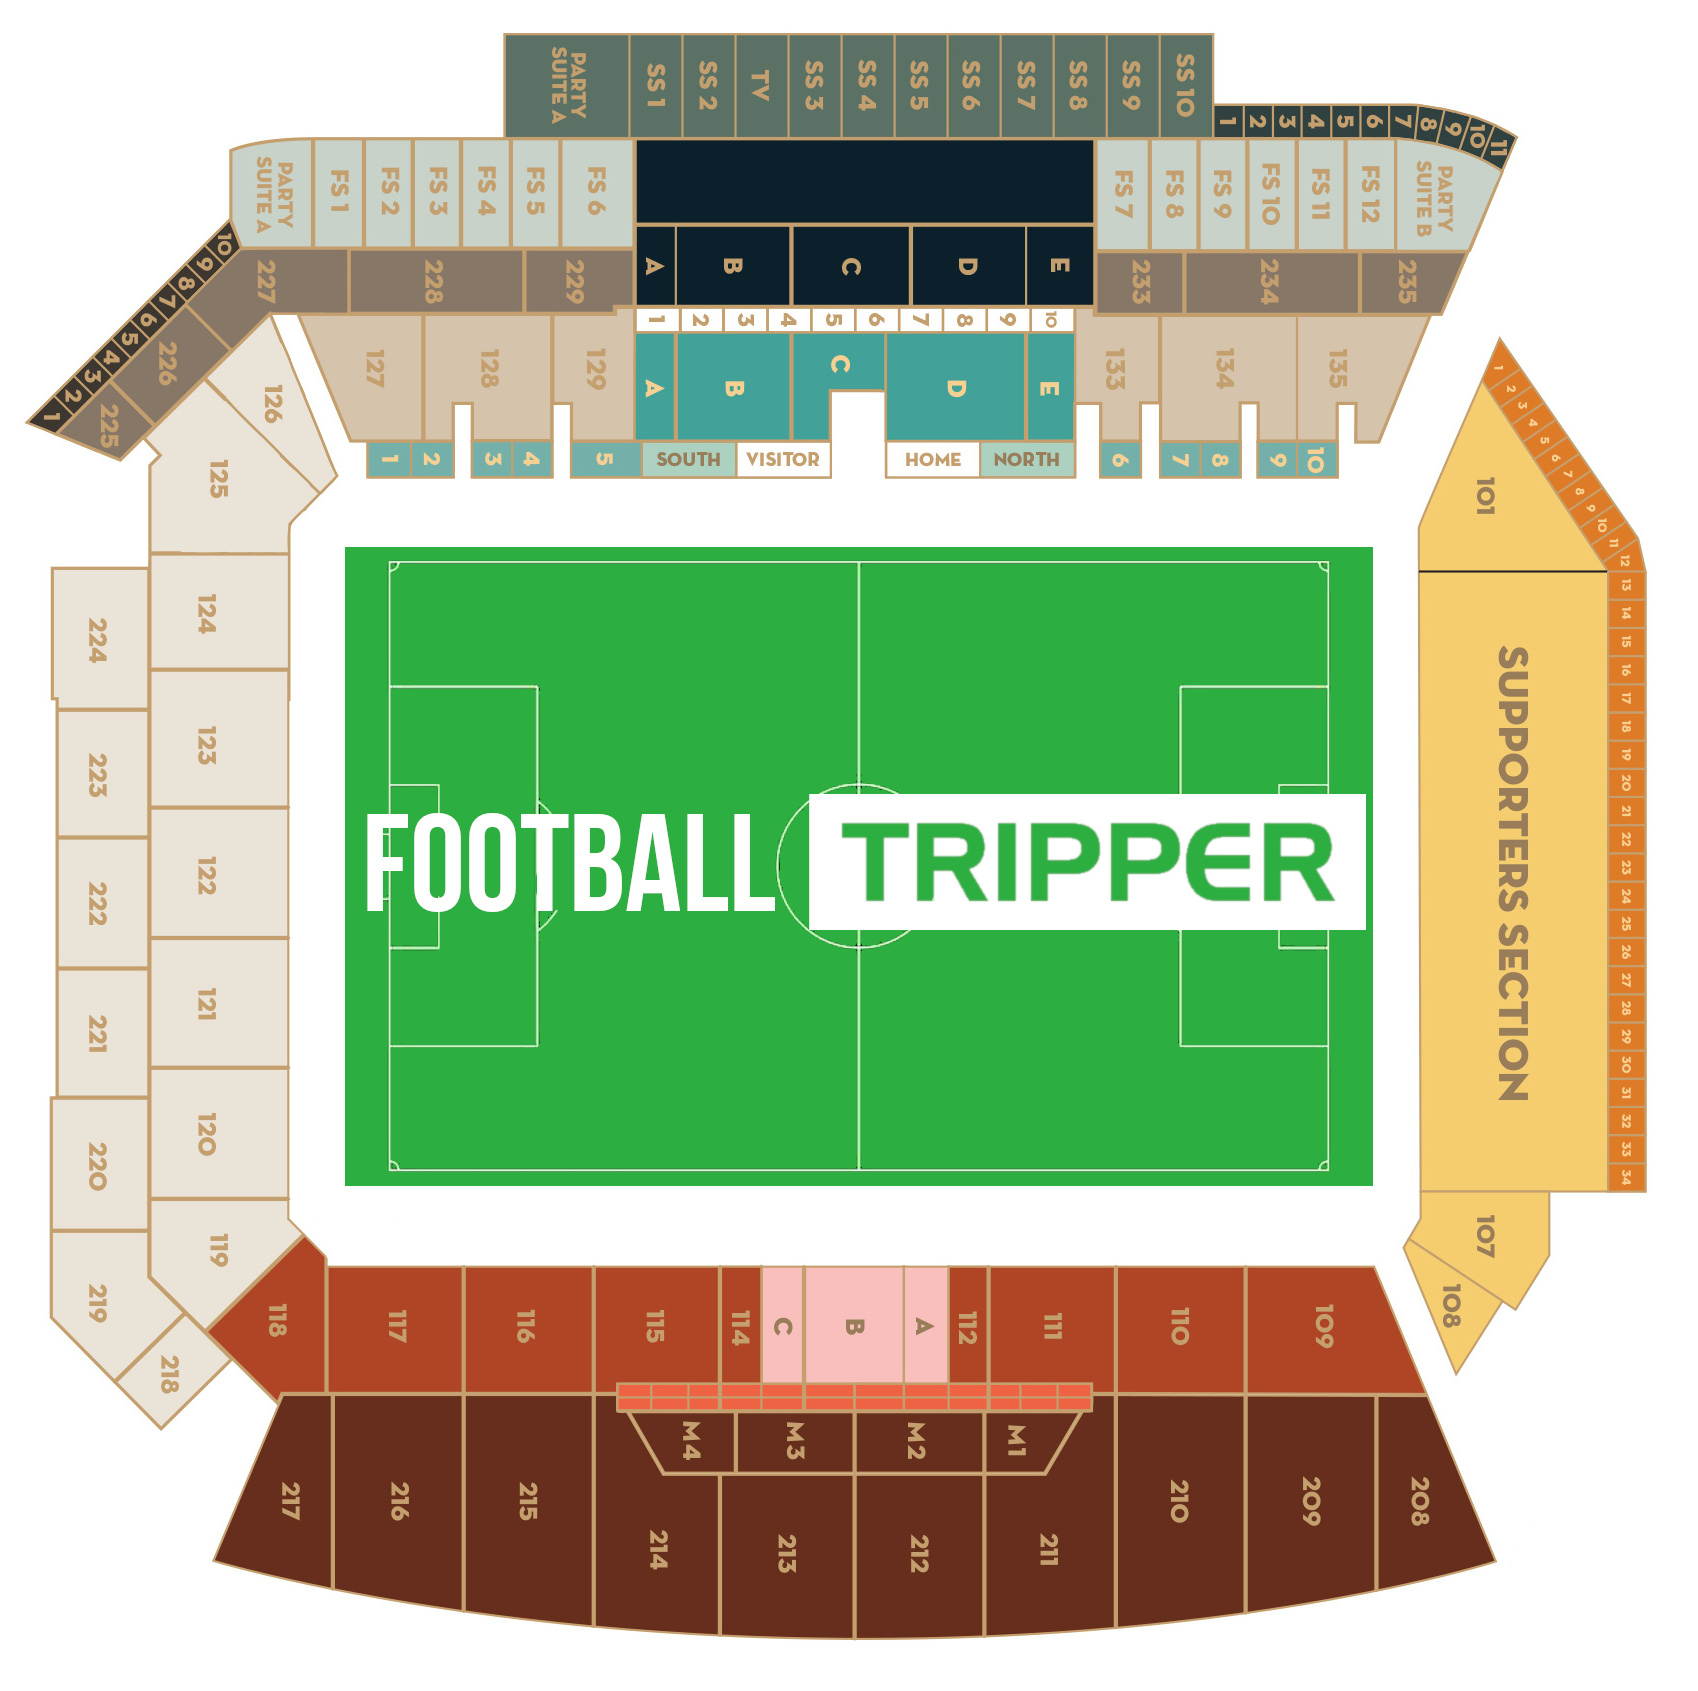 Los Angeles FC Stadium - Banc of California Stadium - Football Tripper